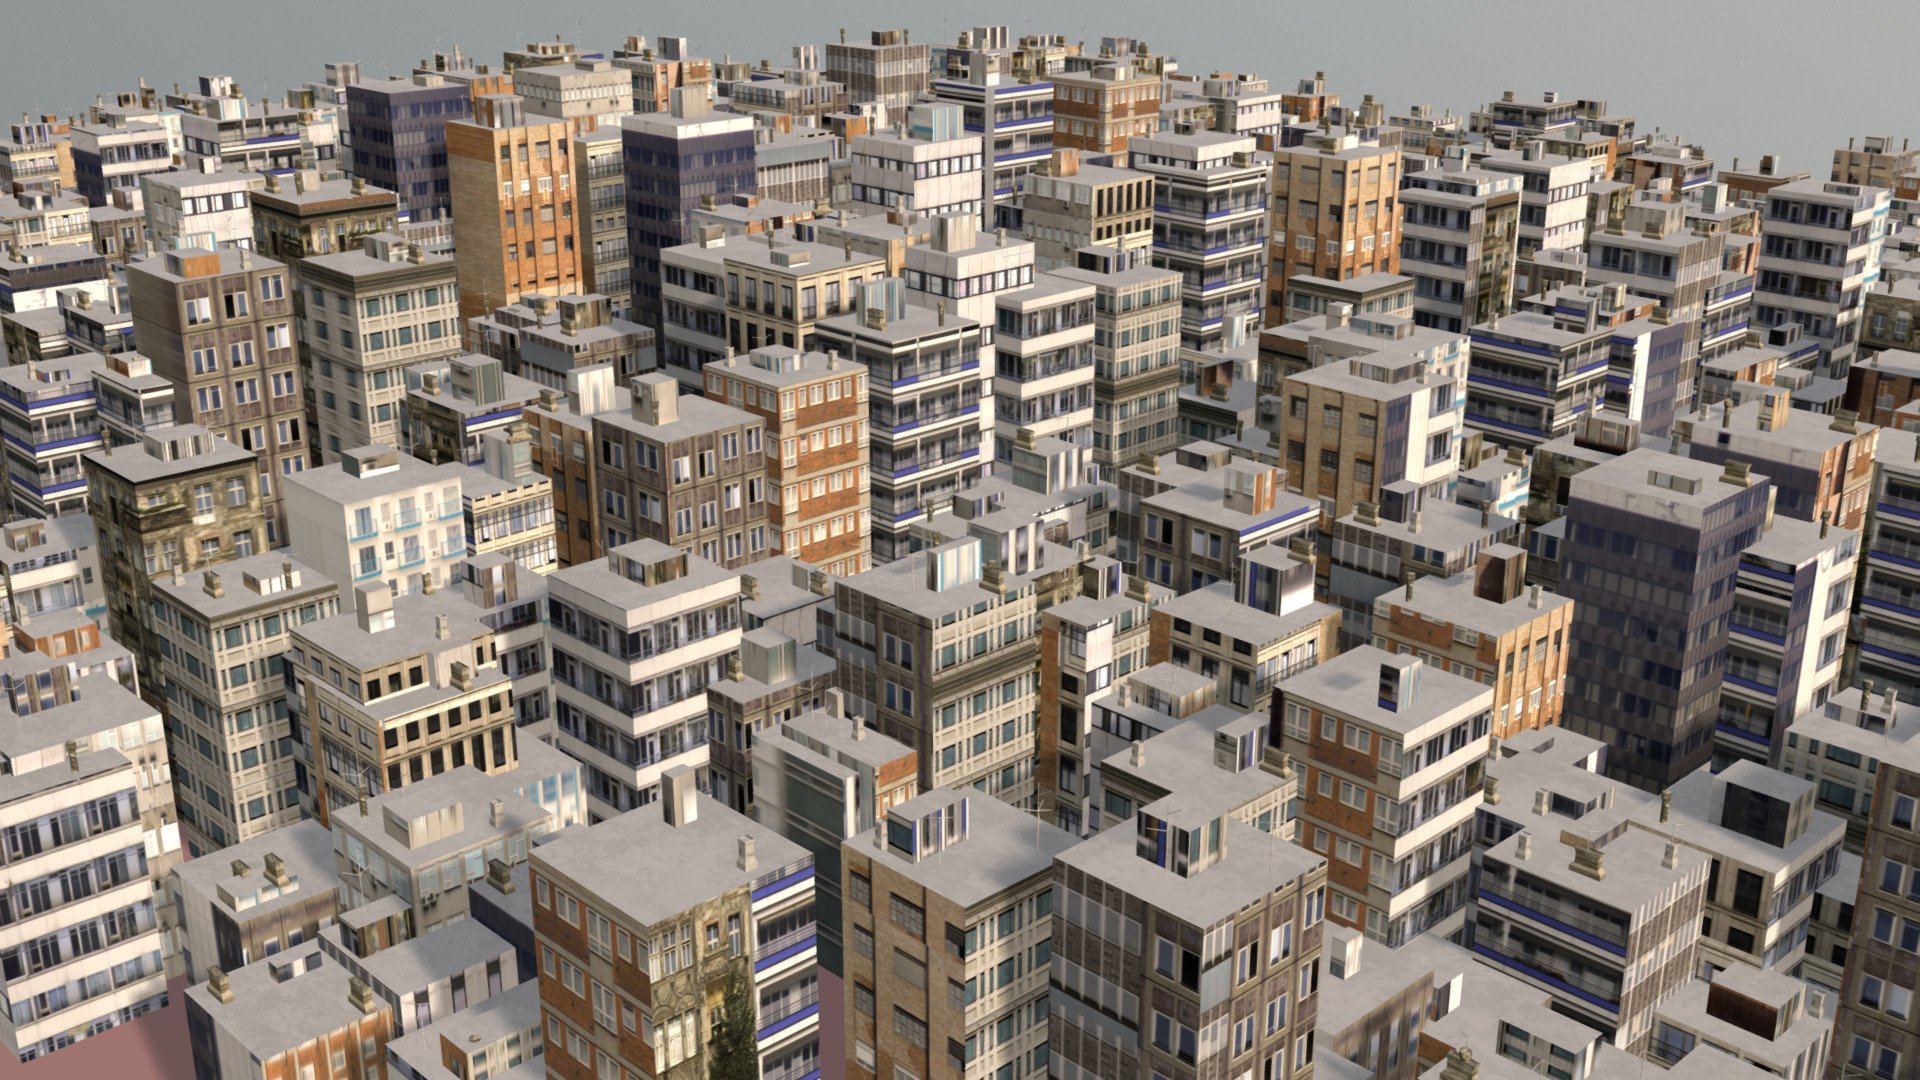 Procedural city created in Blender using Python

https://youtu.be/niui6e73En4 - FlyHigh - Procedural City - 3D model by JorgeJuanGonzalez 3d model